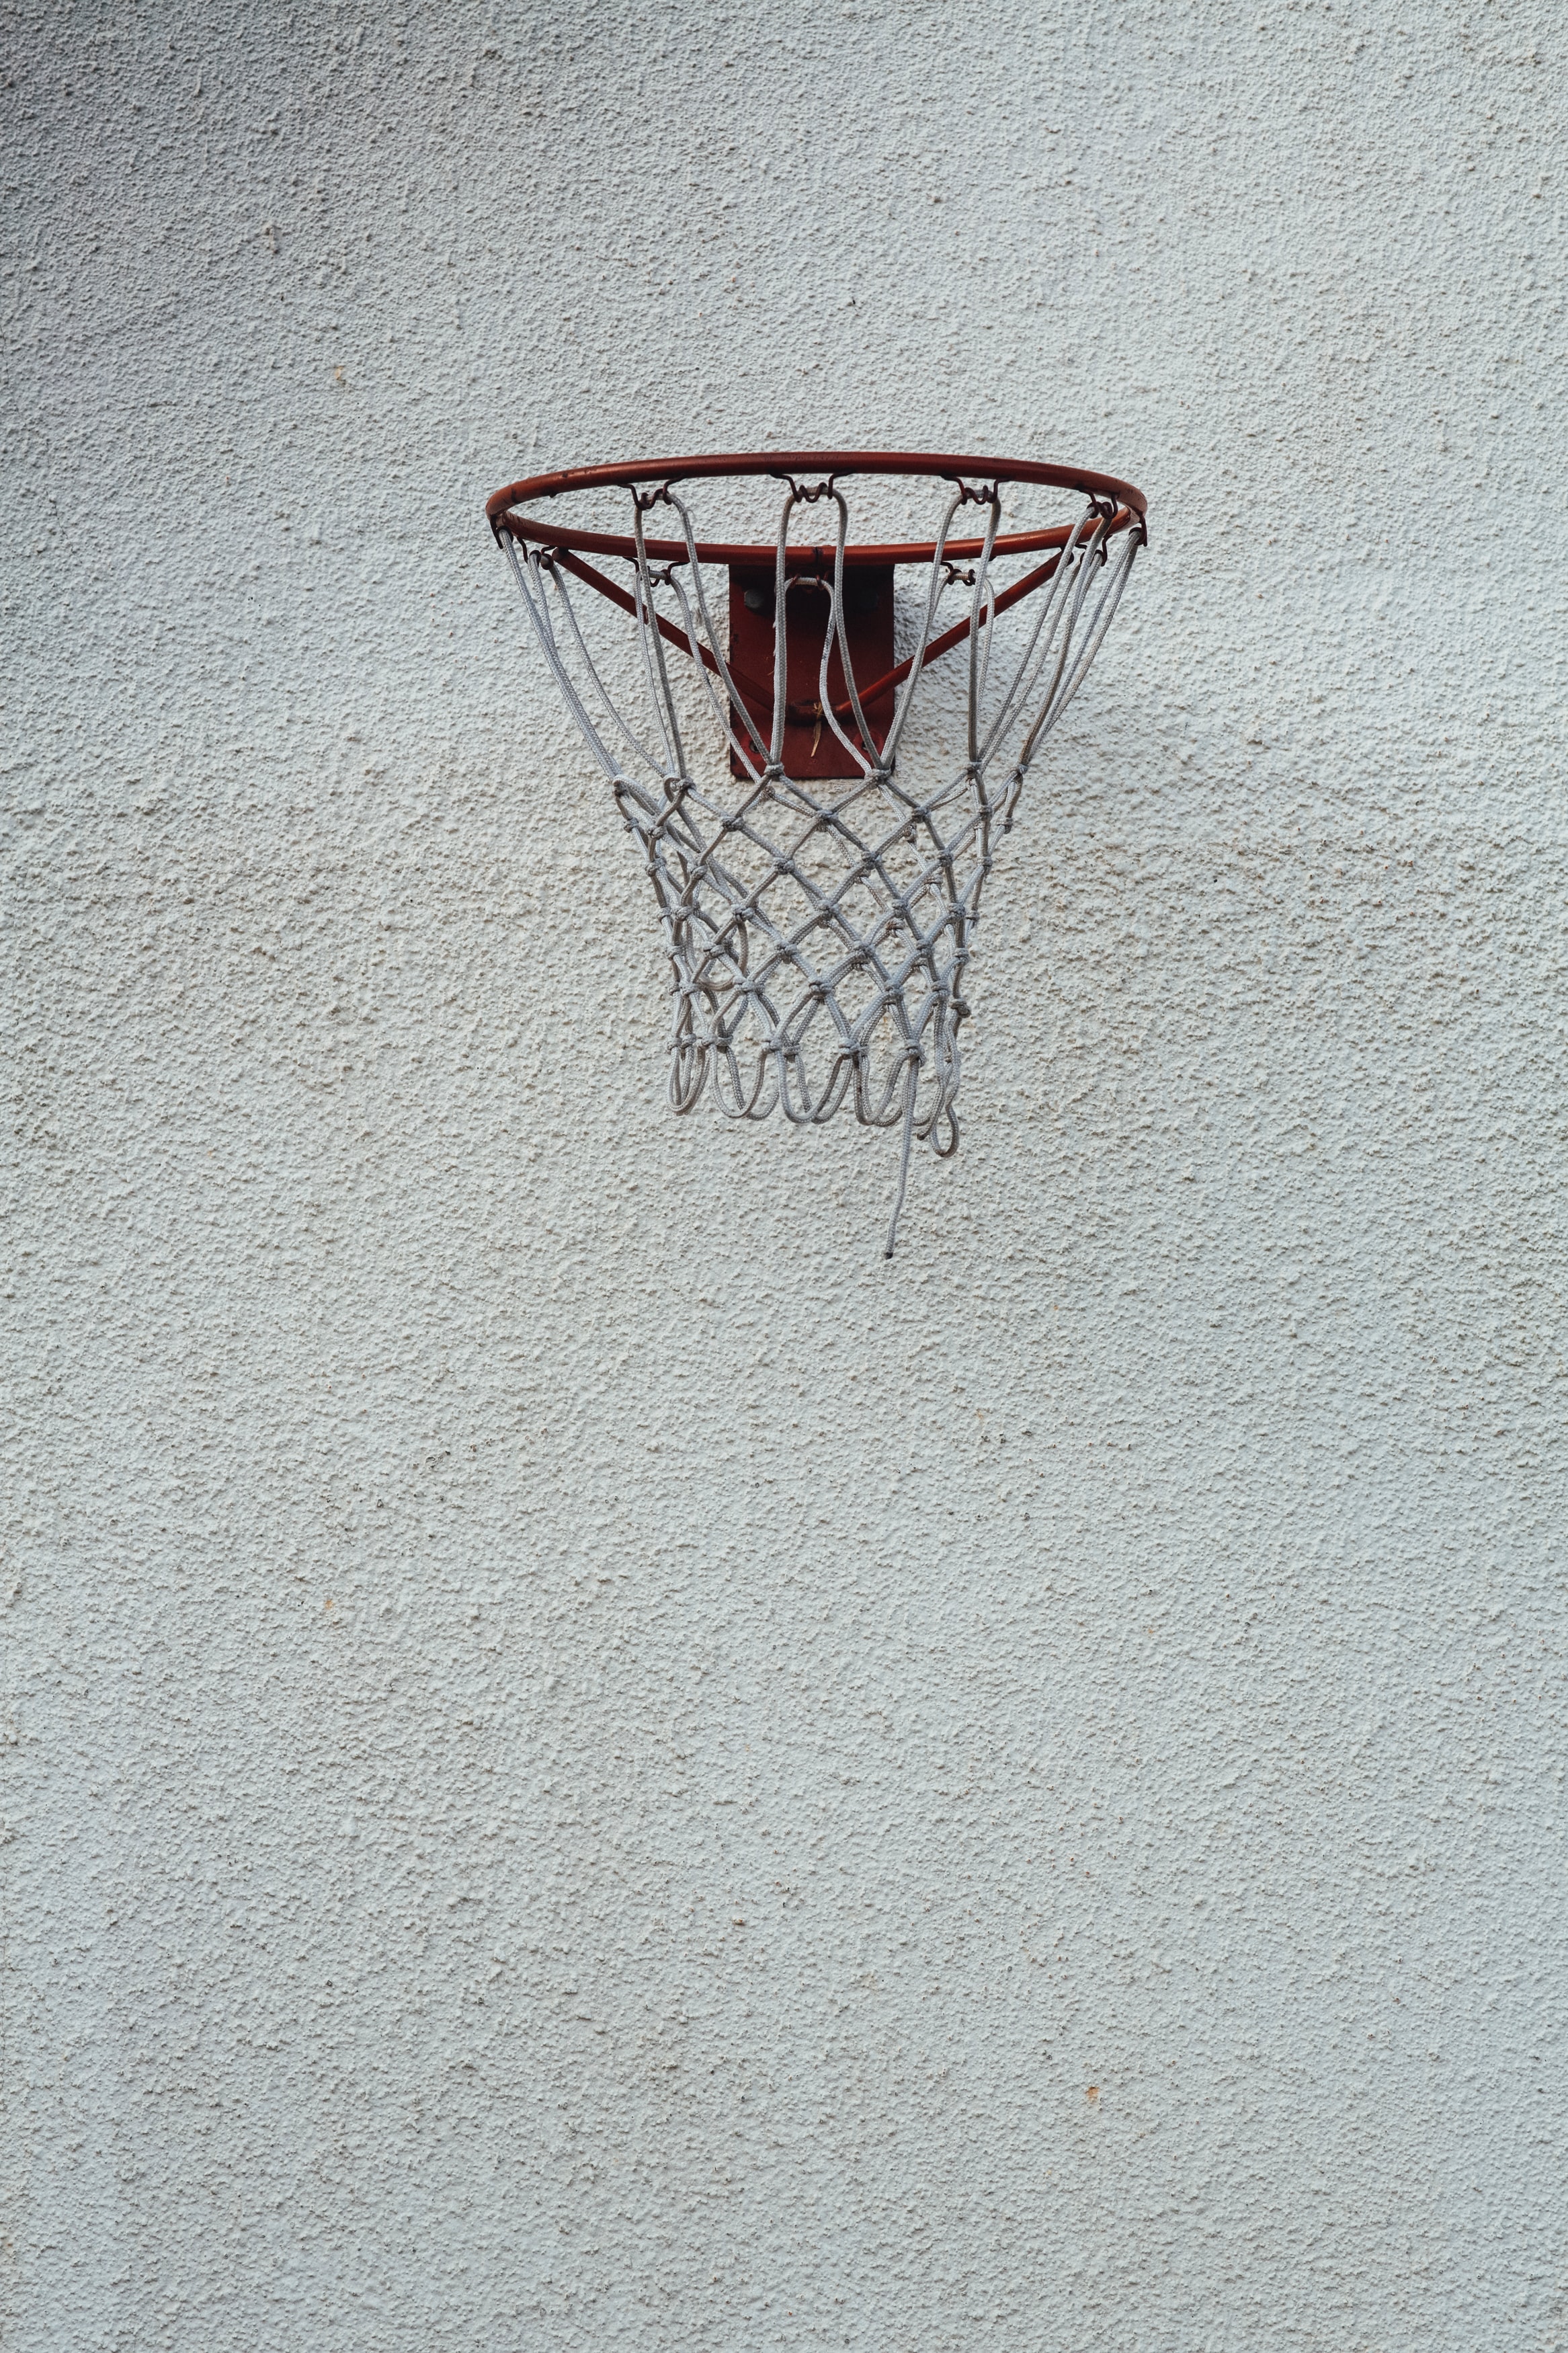 Free HD basketball, basketball hoop, basketball ring, miscellanea, miscellaneous, grid, wall